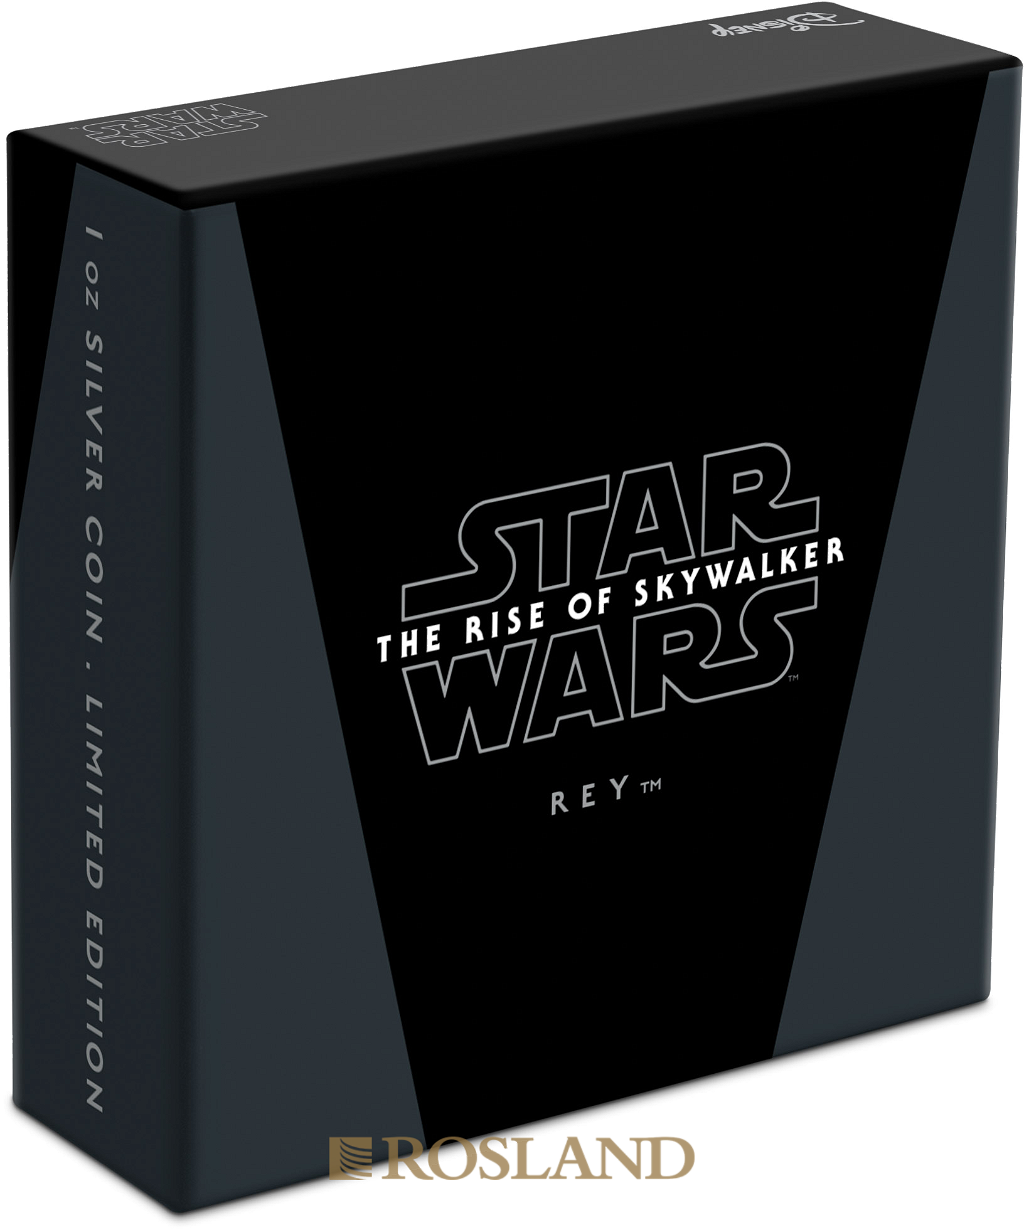 1 Unze Silbermünze Star Wars™ Rey 2019 PP (Koloriert, Box, Zertifikat)